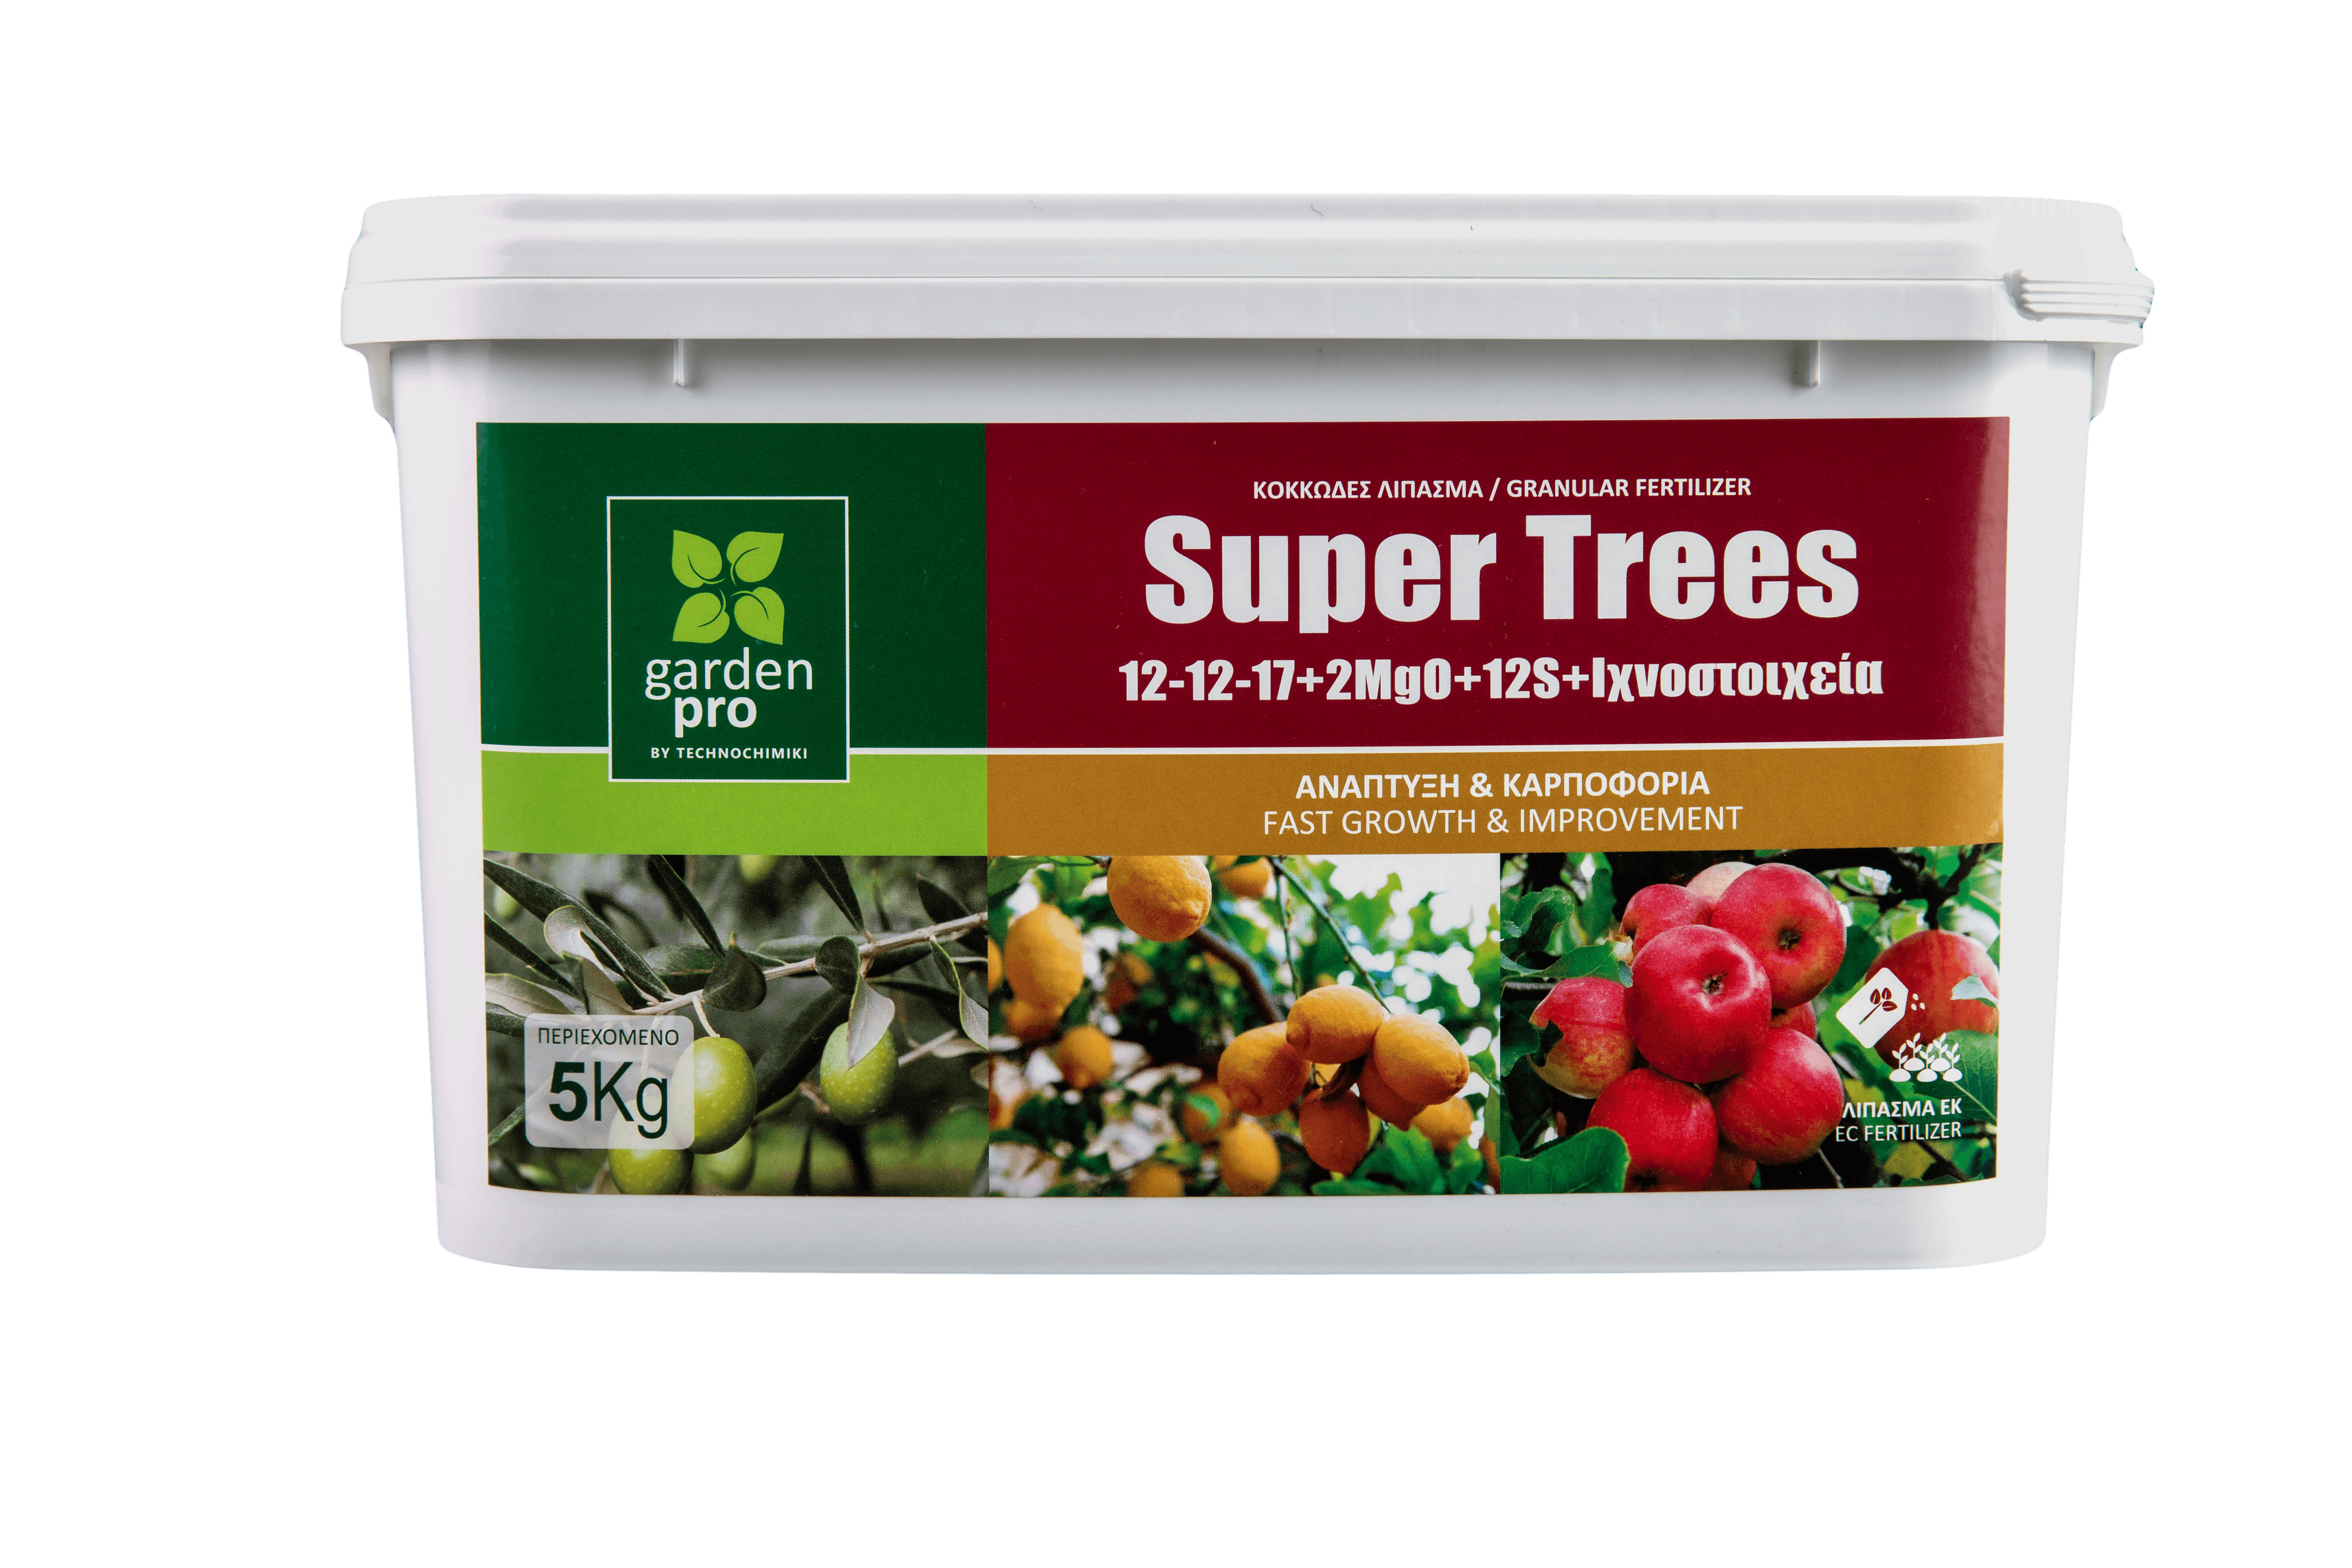 GARDEN PRO SUPER TREES 12-12-17 5KG